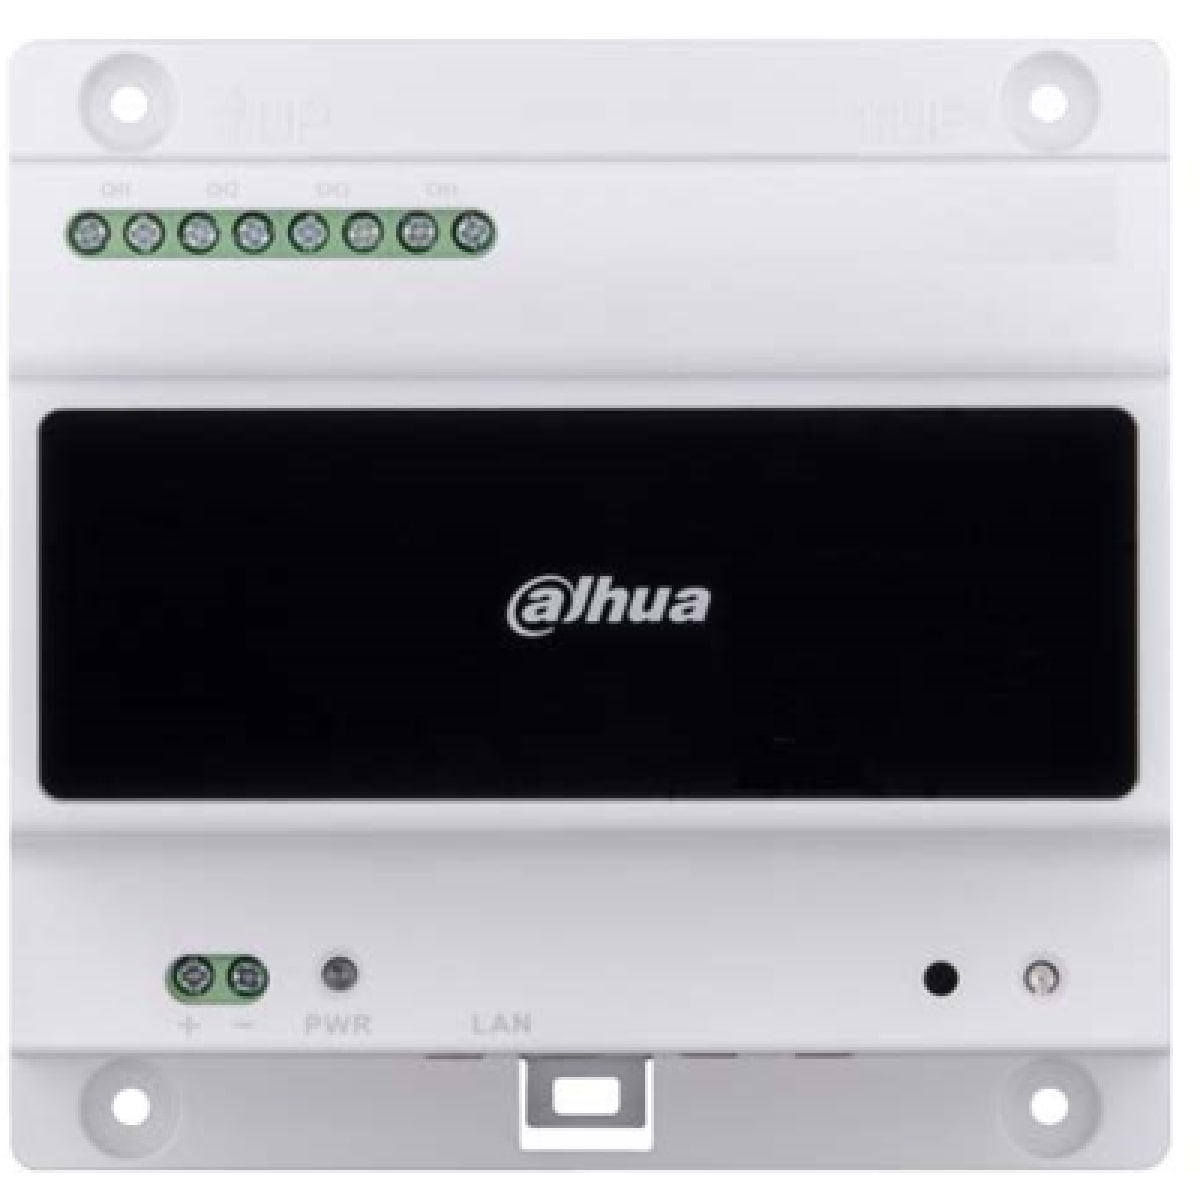 Dahua VTNC3000A 2-Wire Network Controller